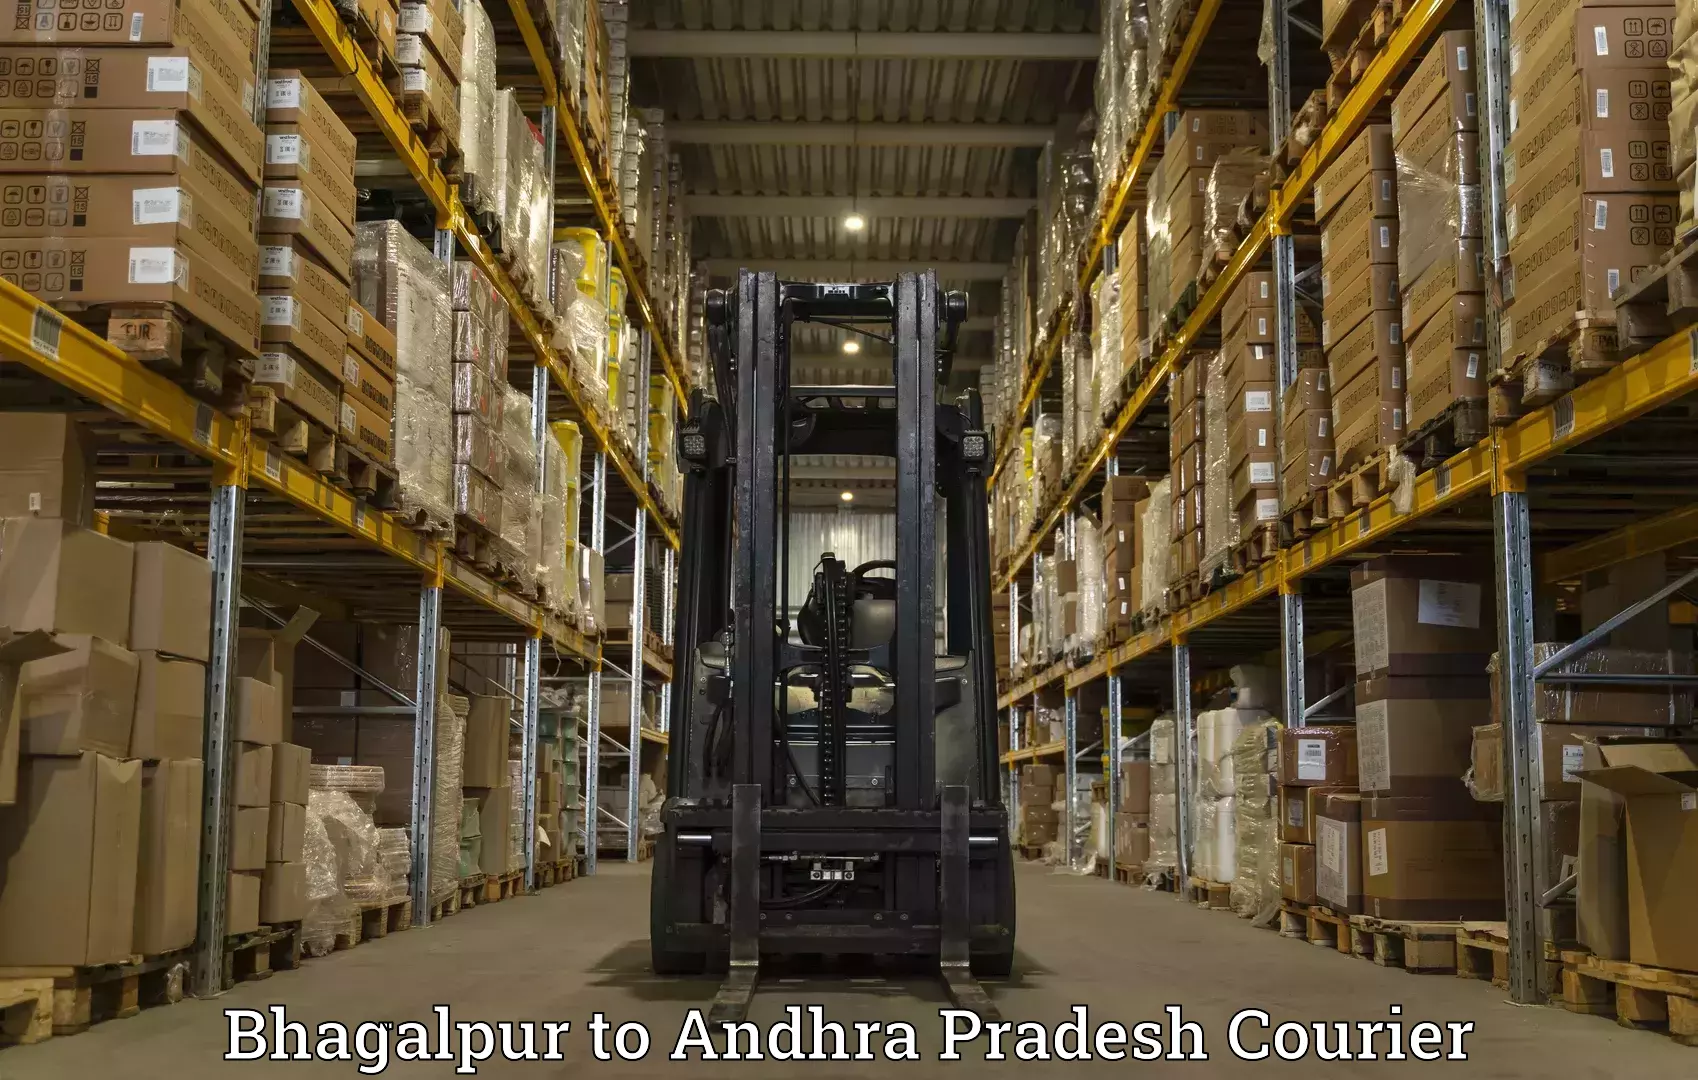 Efficient shipping platforms Bhagalpur to Pathapatnam